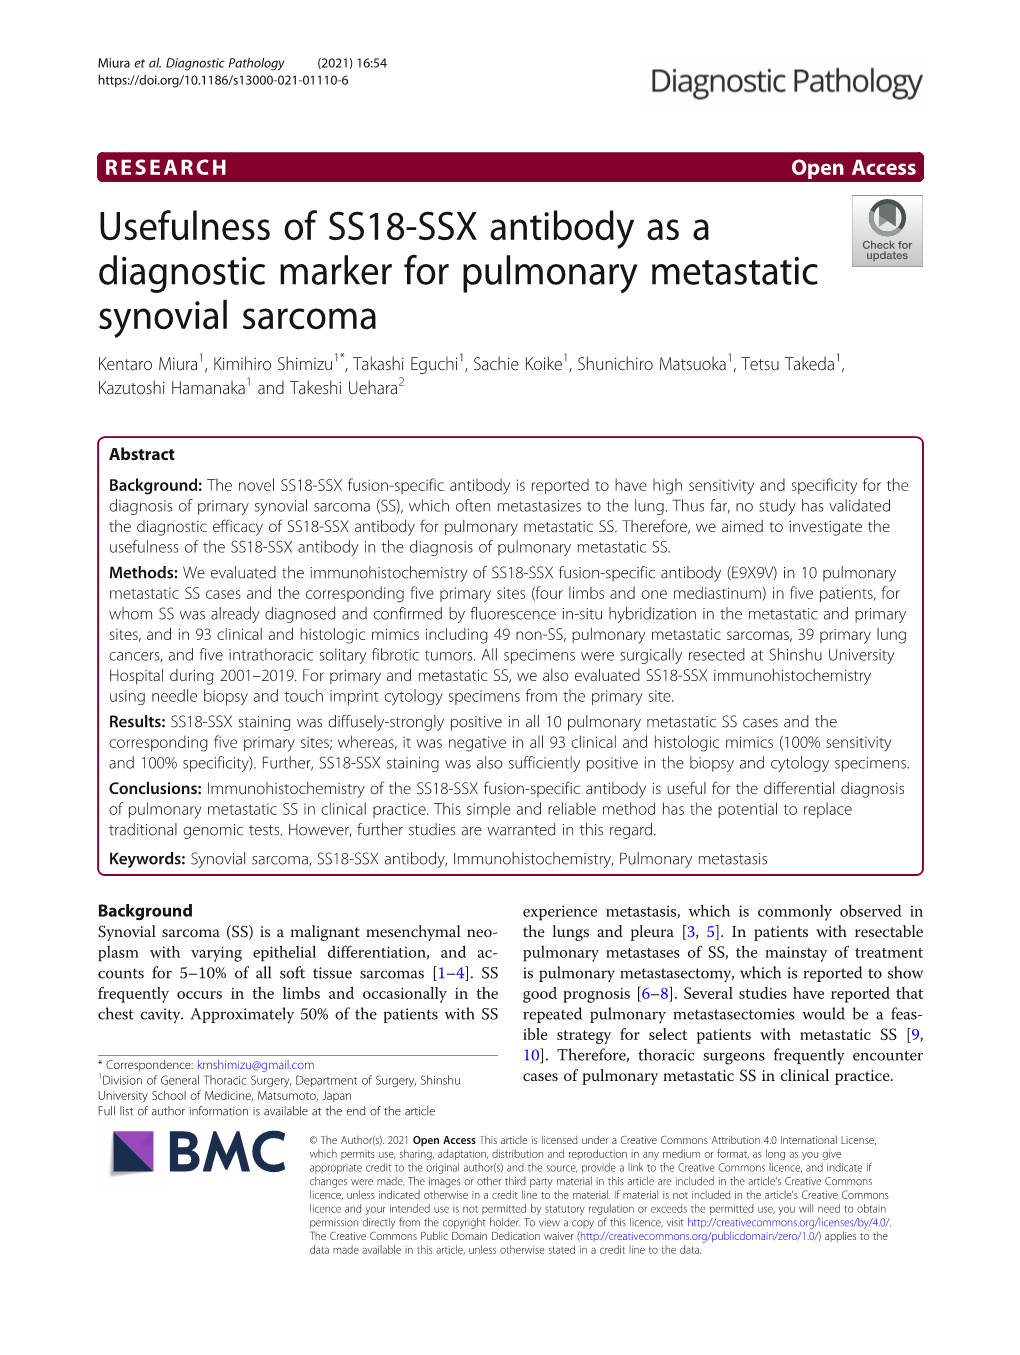 Usefulness of SS18-SSX Antibody As a Diagnostic Marker for Pulmonary Metastatic Synovial Sarcoma